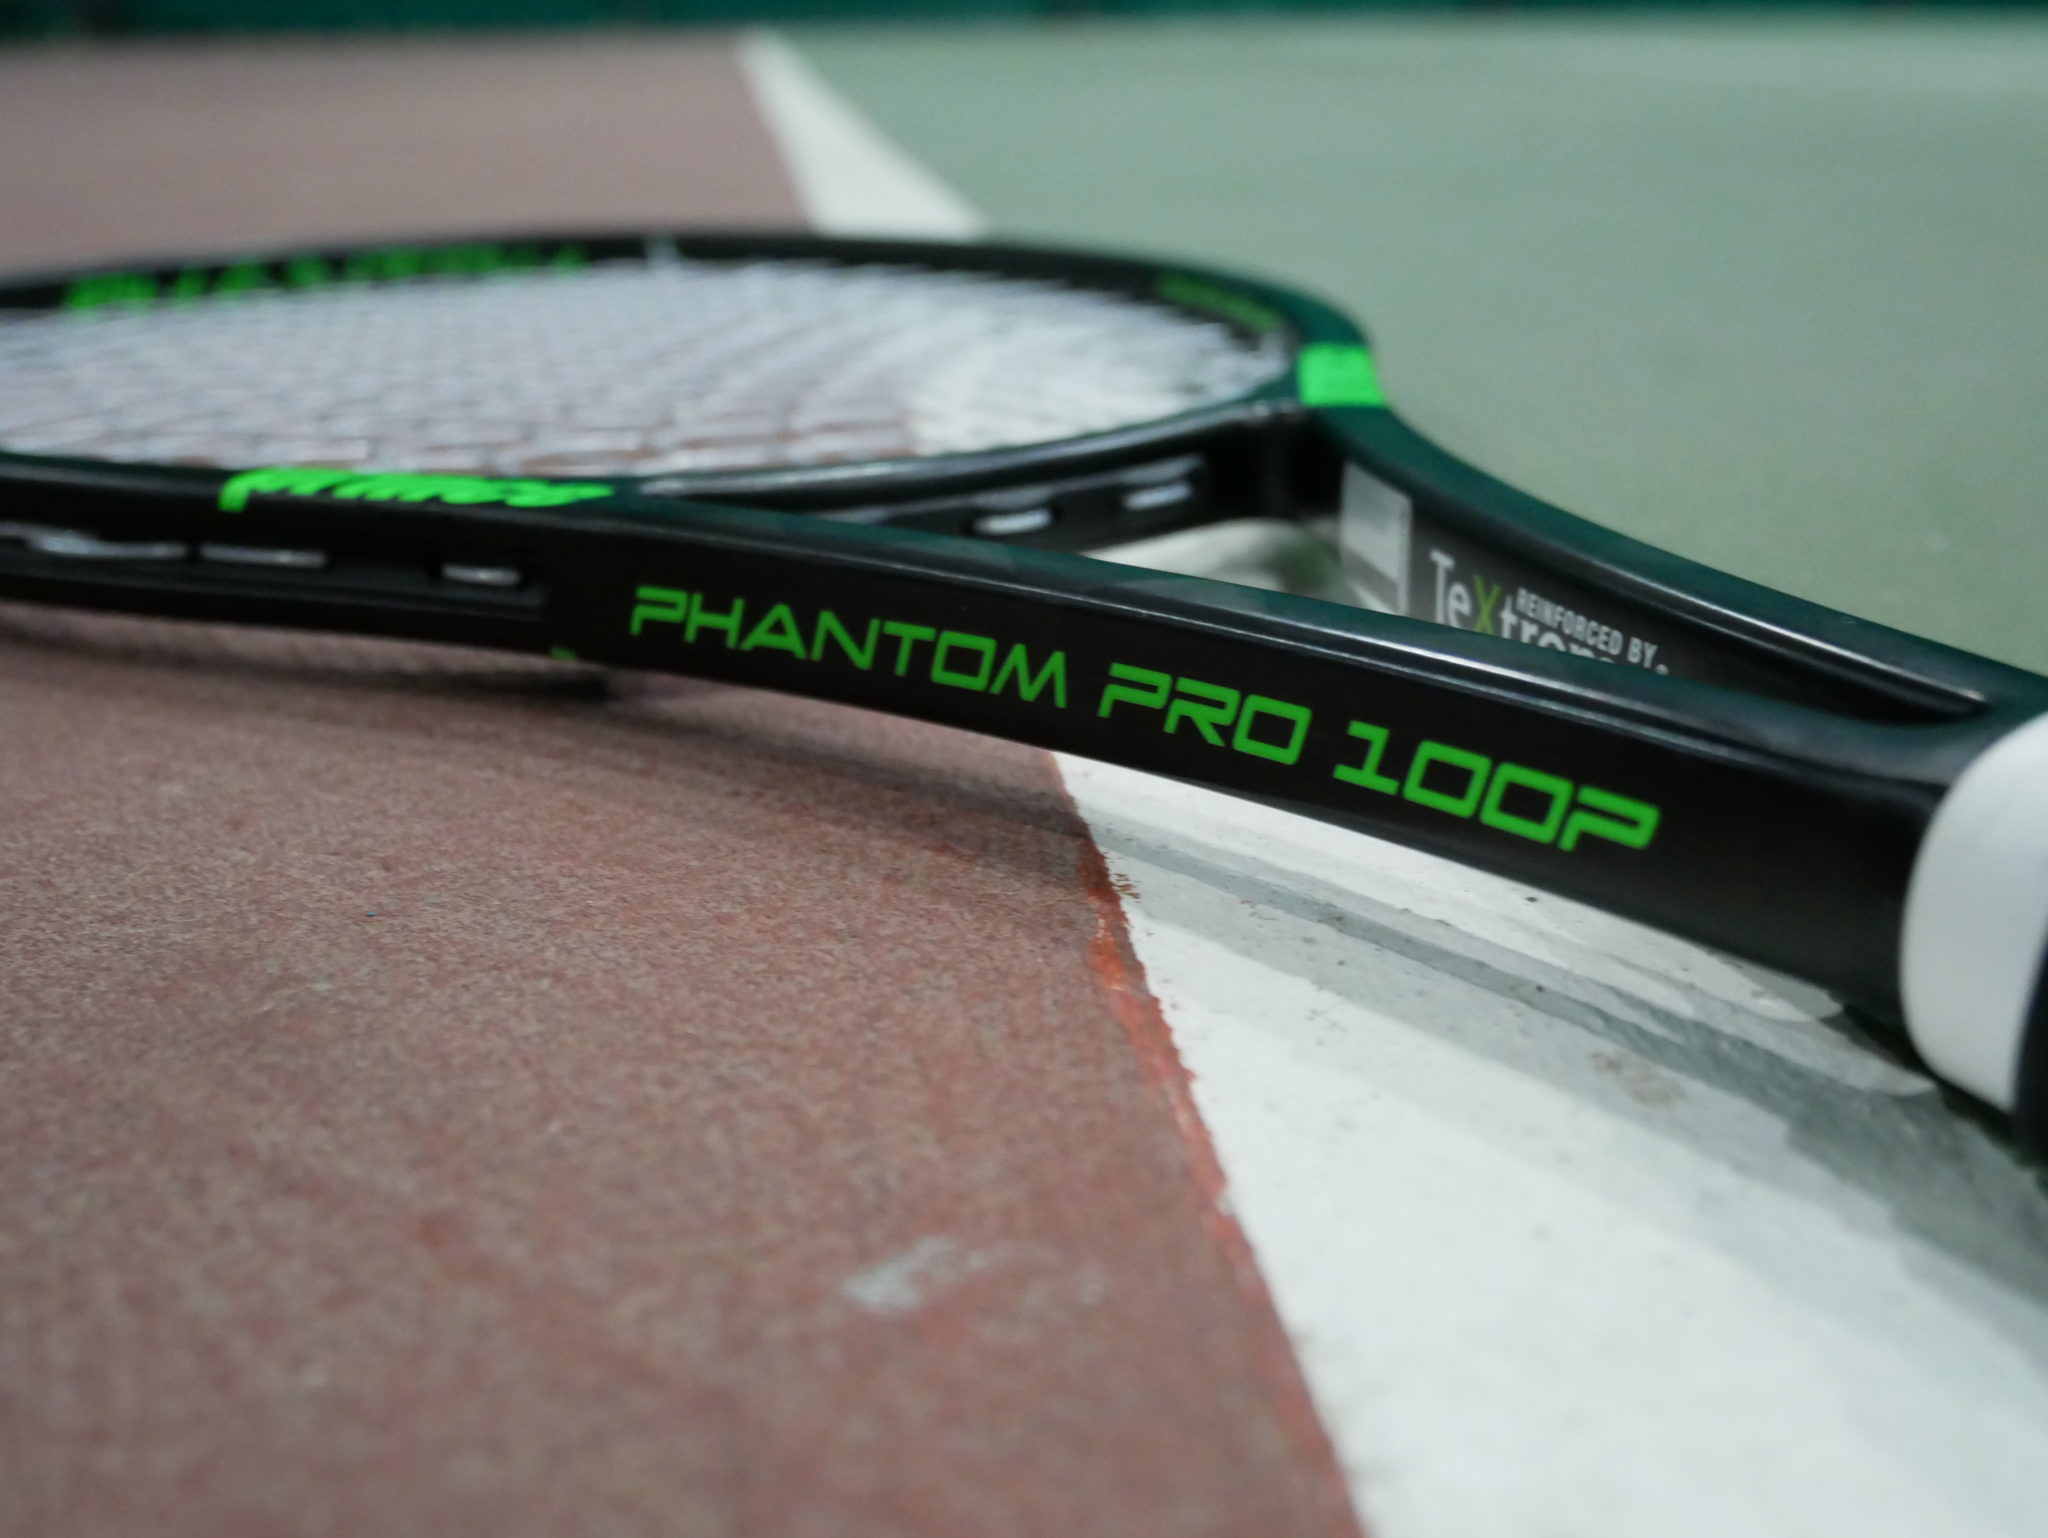 Prince Phantom Pro 100P Review - Tennisnerd.net